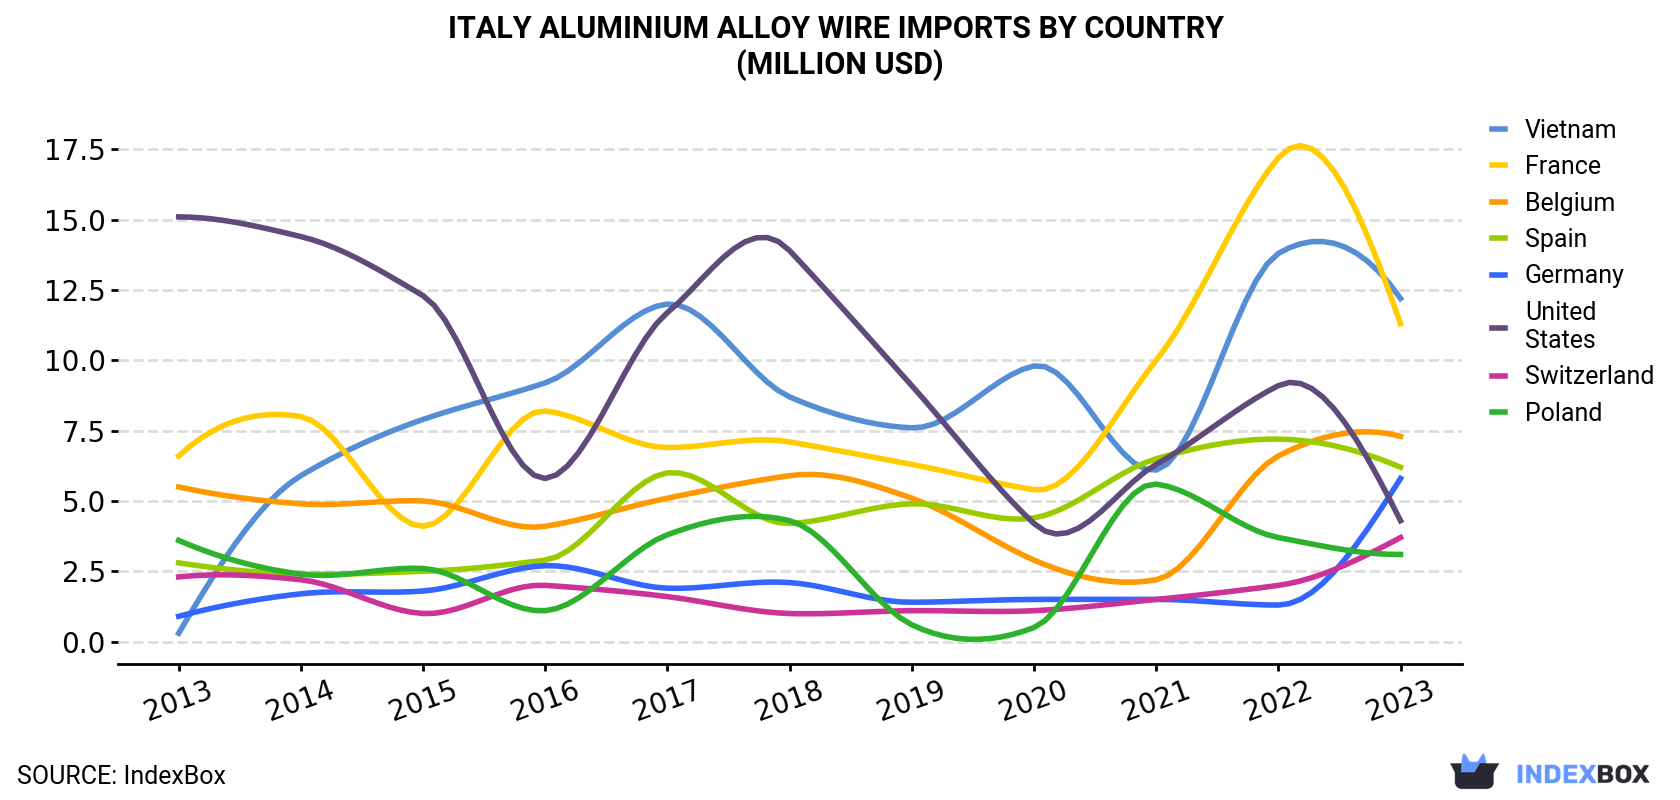 Italy Aluminium Alloy Wire Imports By Country (Million USD)